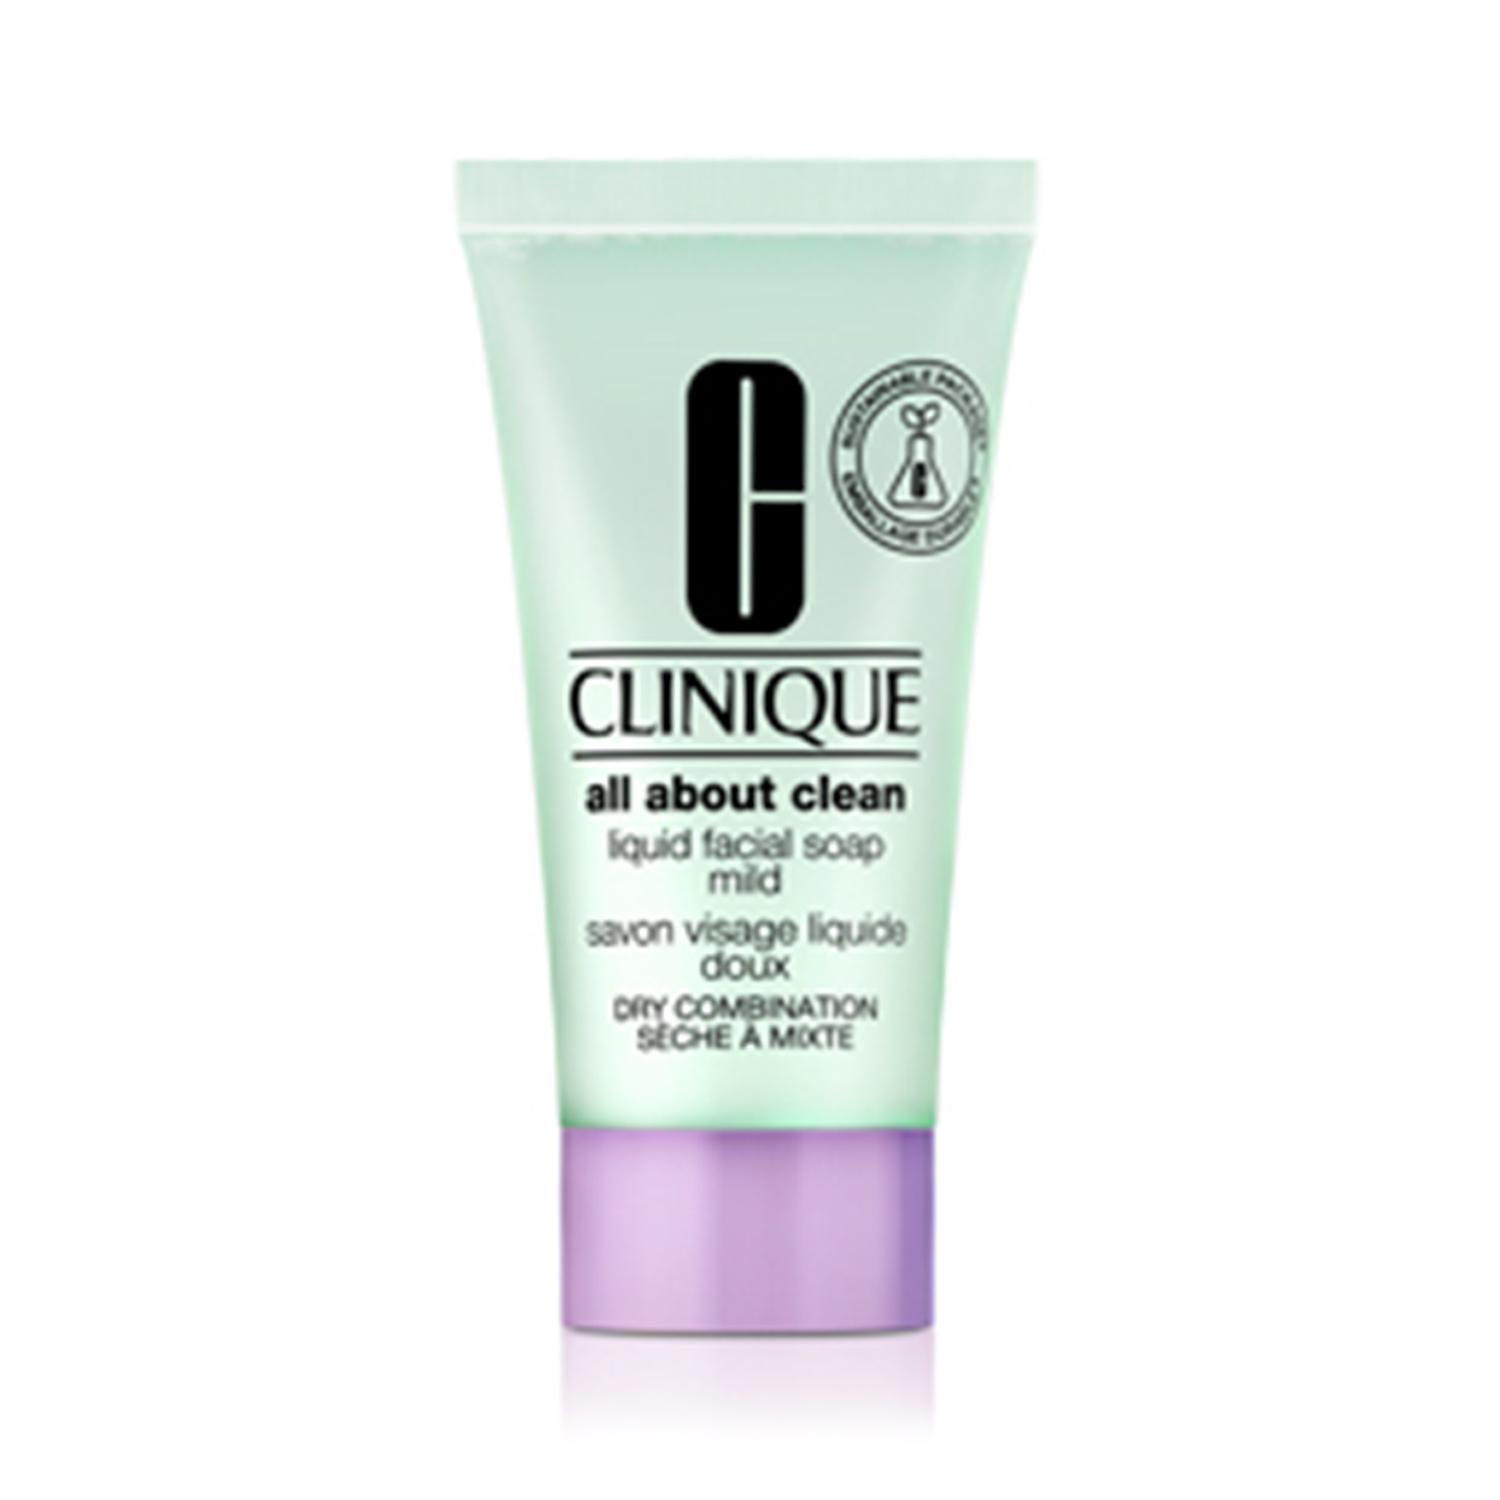 CLINIQUE | CLINIQUE All About Clean Liquid Facial Soap Mild (30ml)